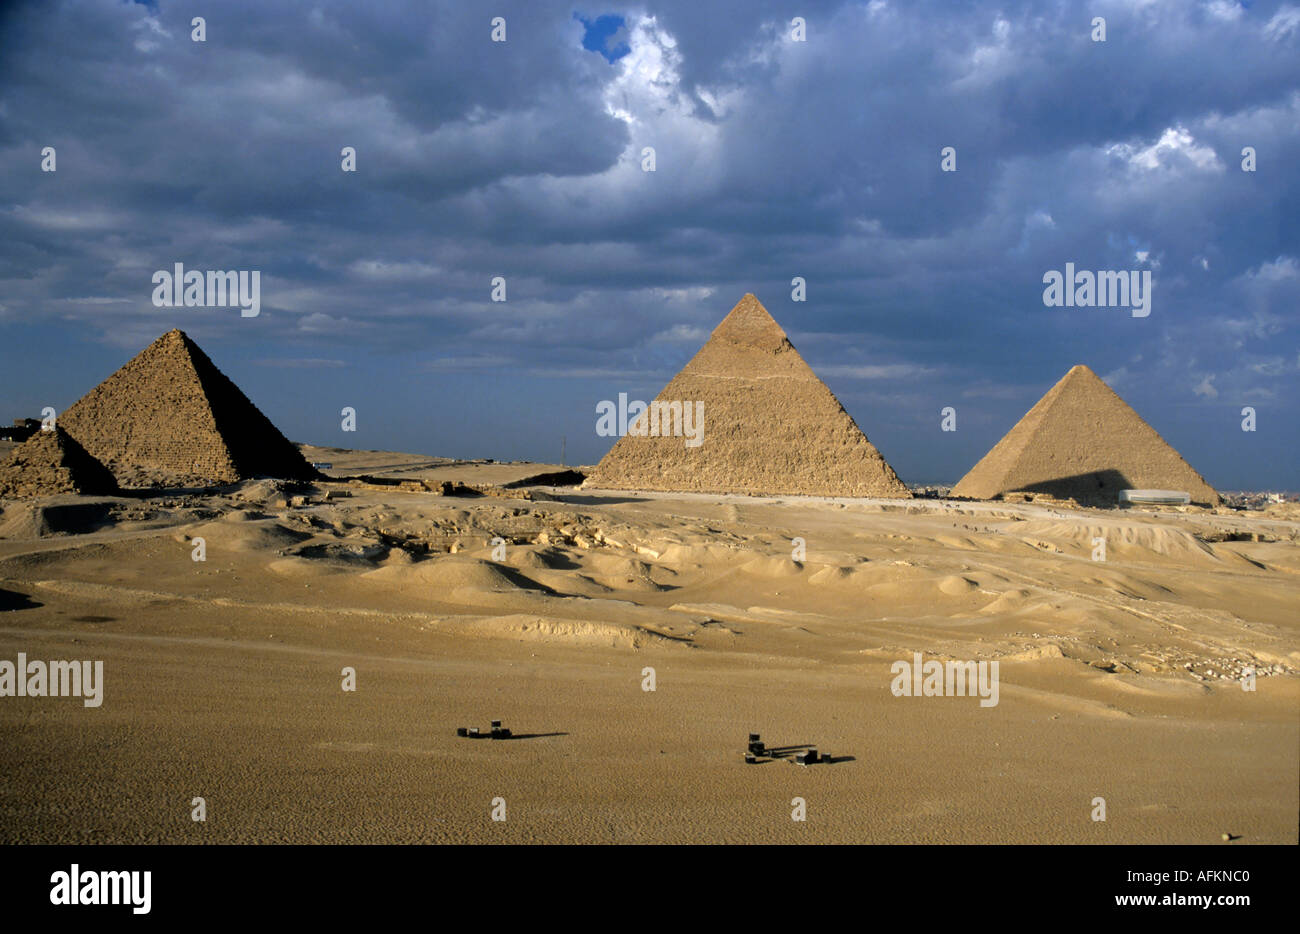 Pyramides, Egypte : pyramide Khephren, Mykérinos pyramide et la grande pyramide de Gizeh, Le Caire, Égypte. Banque D'Images